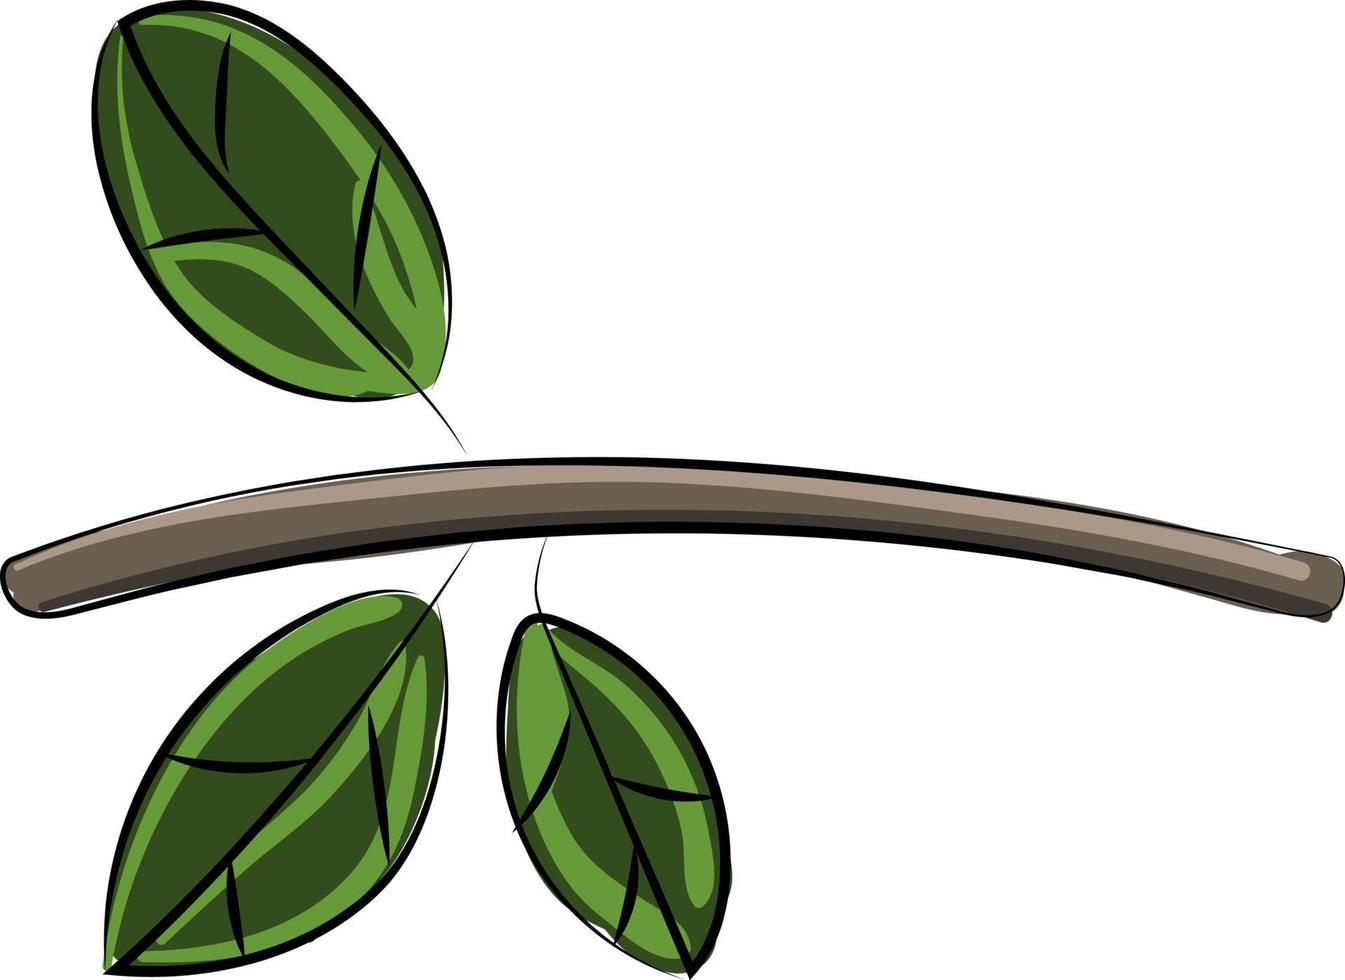 Green branch, illustration, vector on white background.